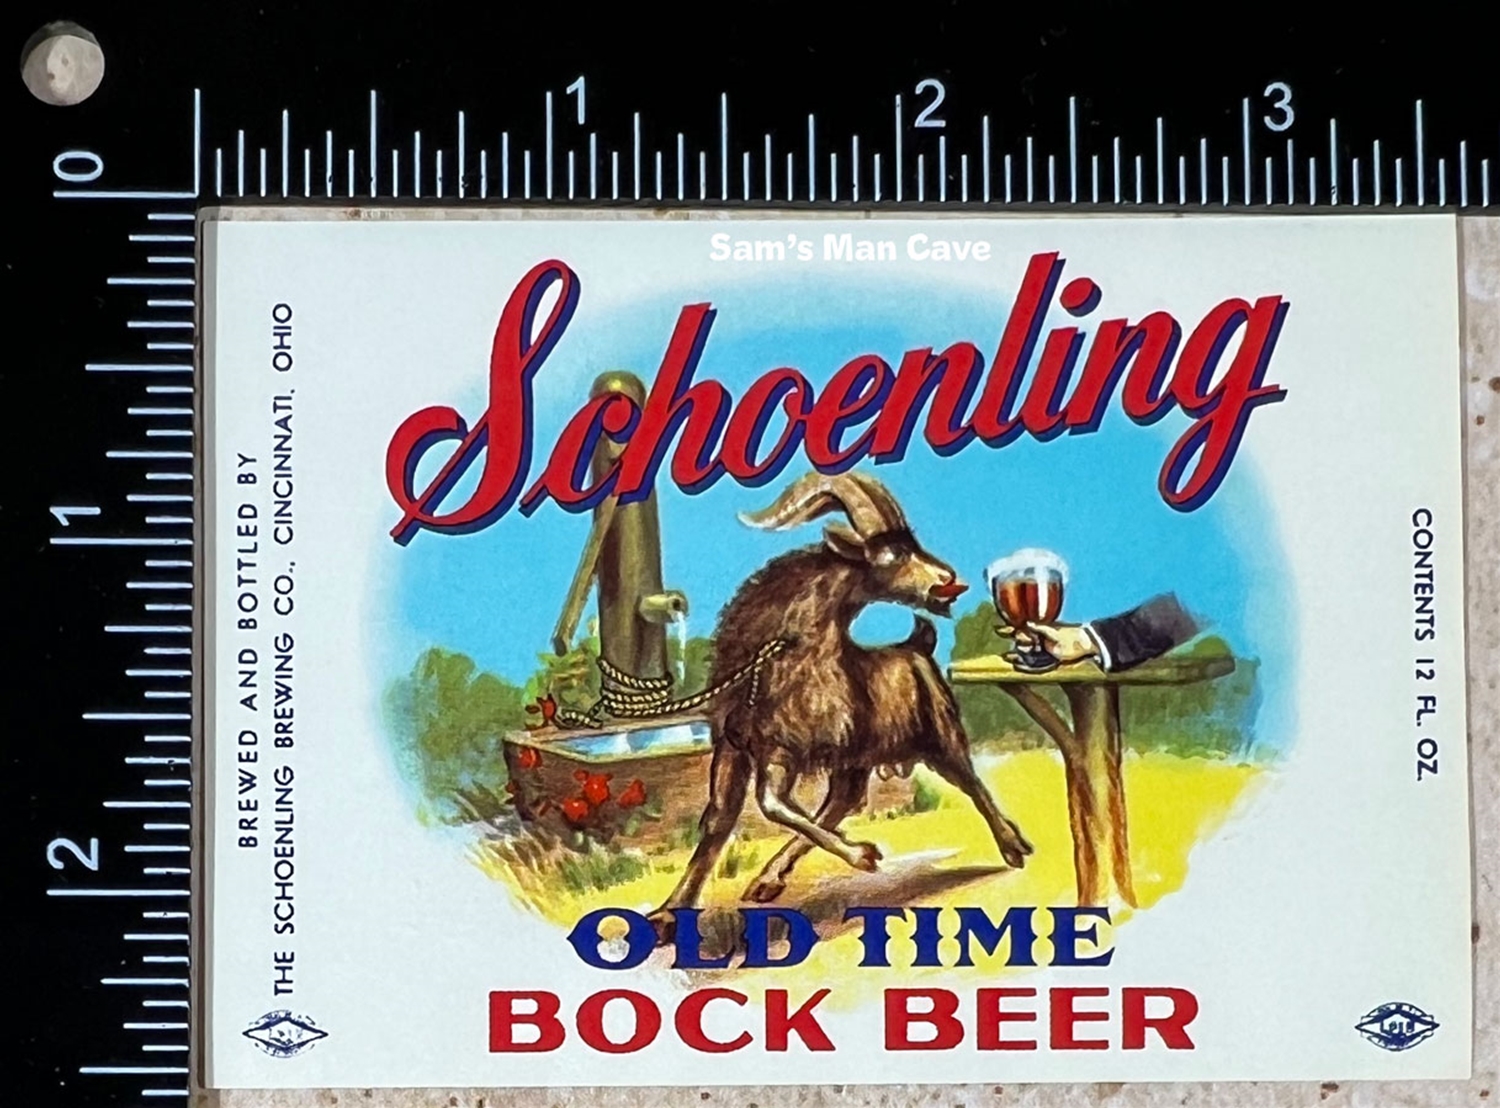 Schoenling Old Time Bock Beer Label